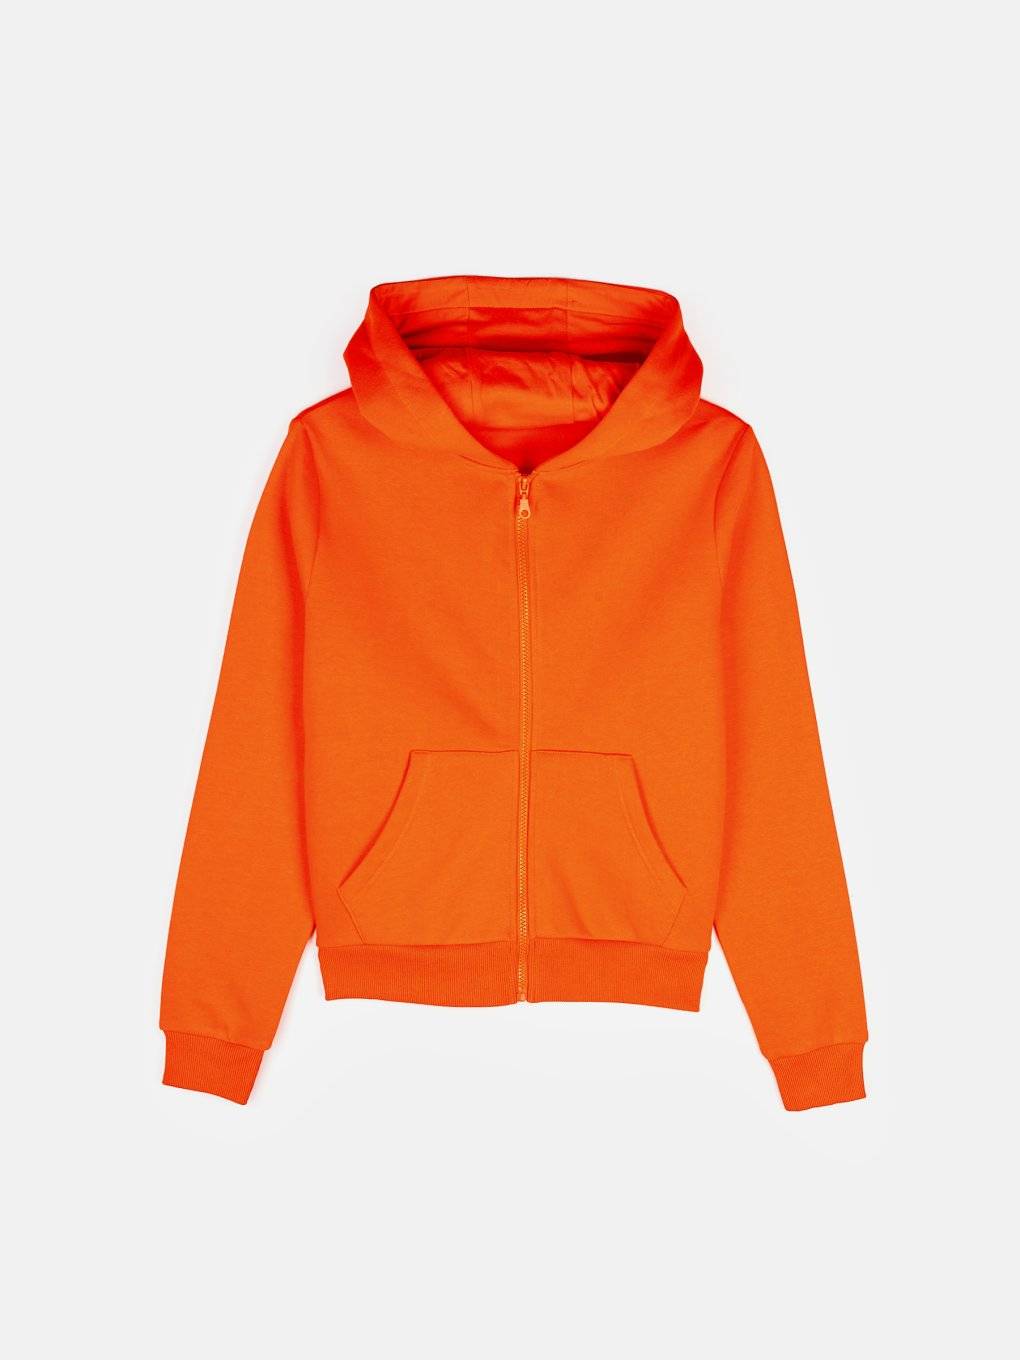 Basic zip-up hoodie with kangaroo pocket